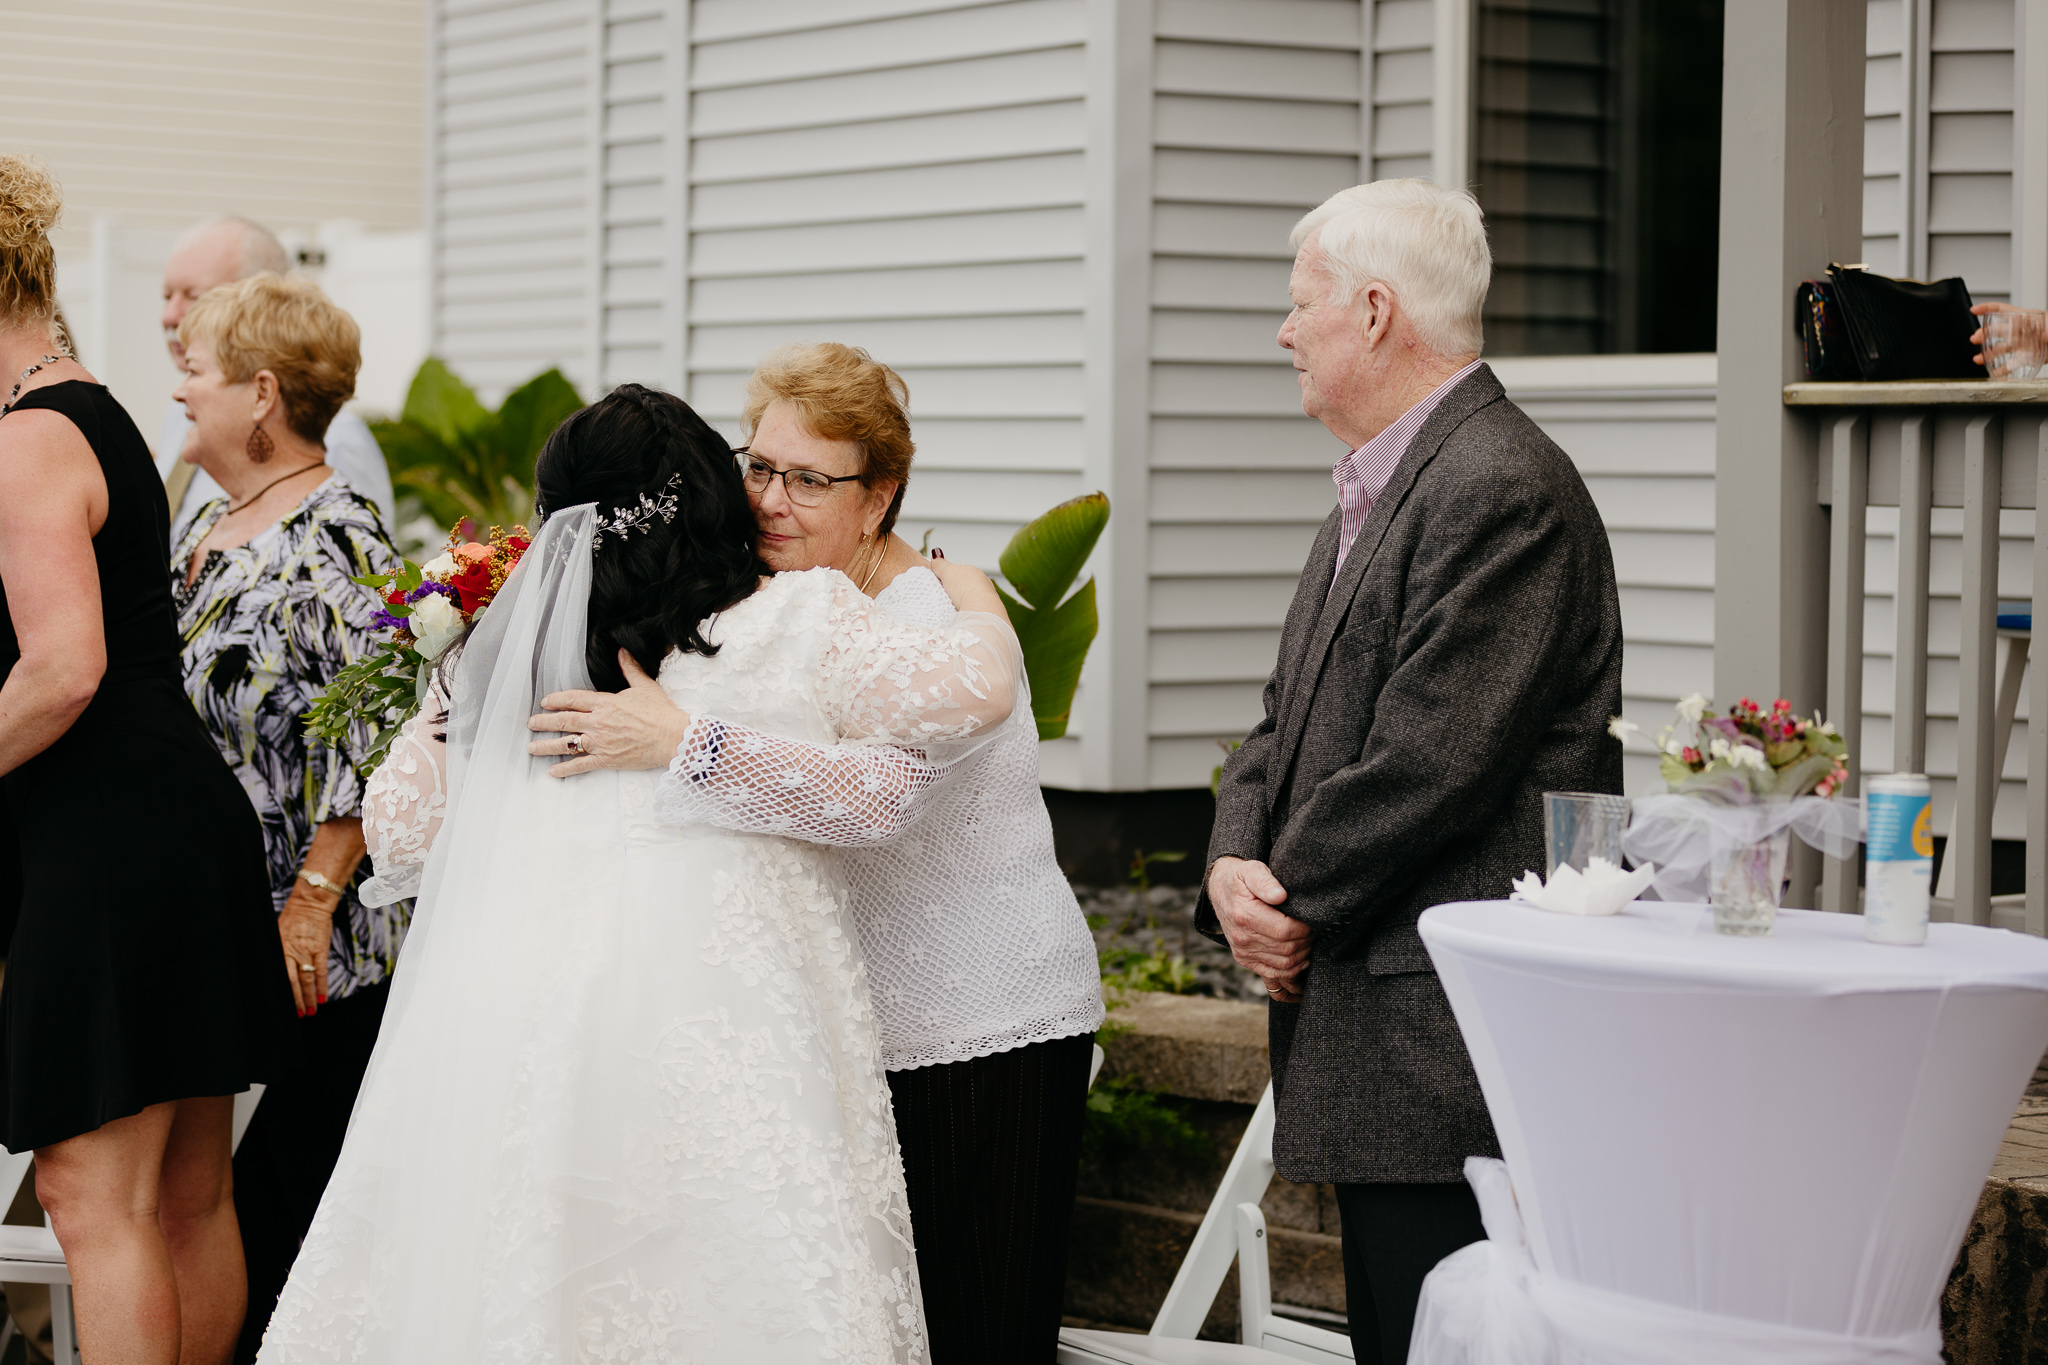 Fort Wayne Indiana Backyard wedding ceremony